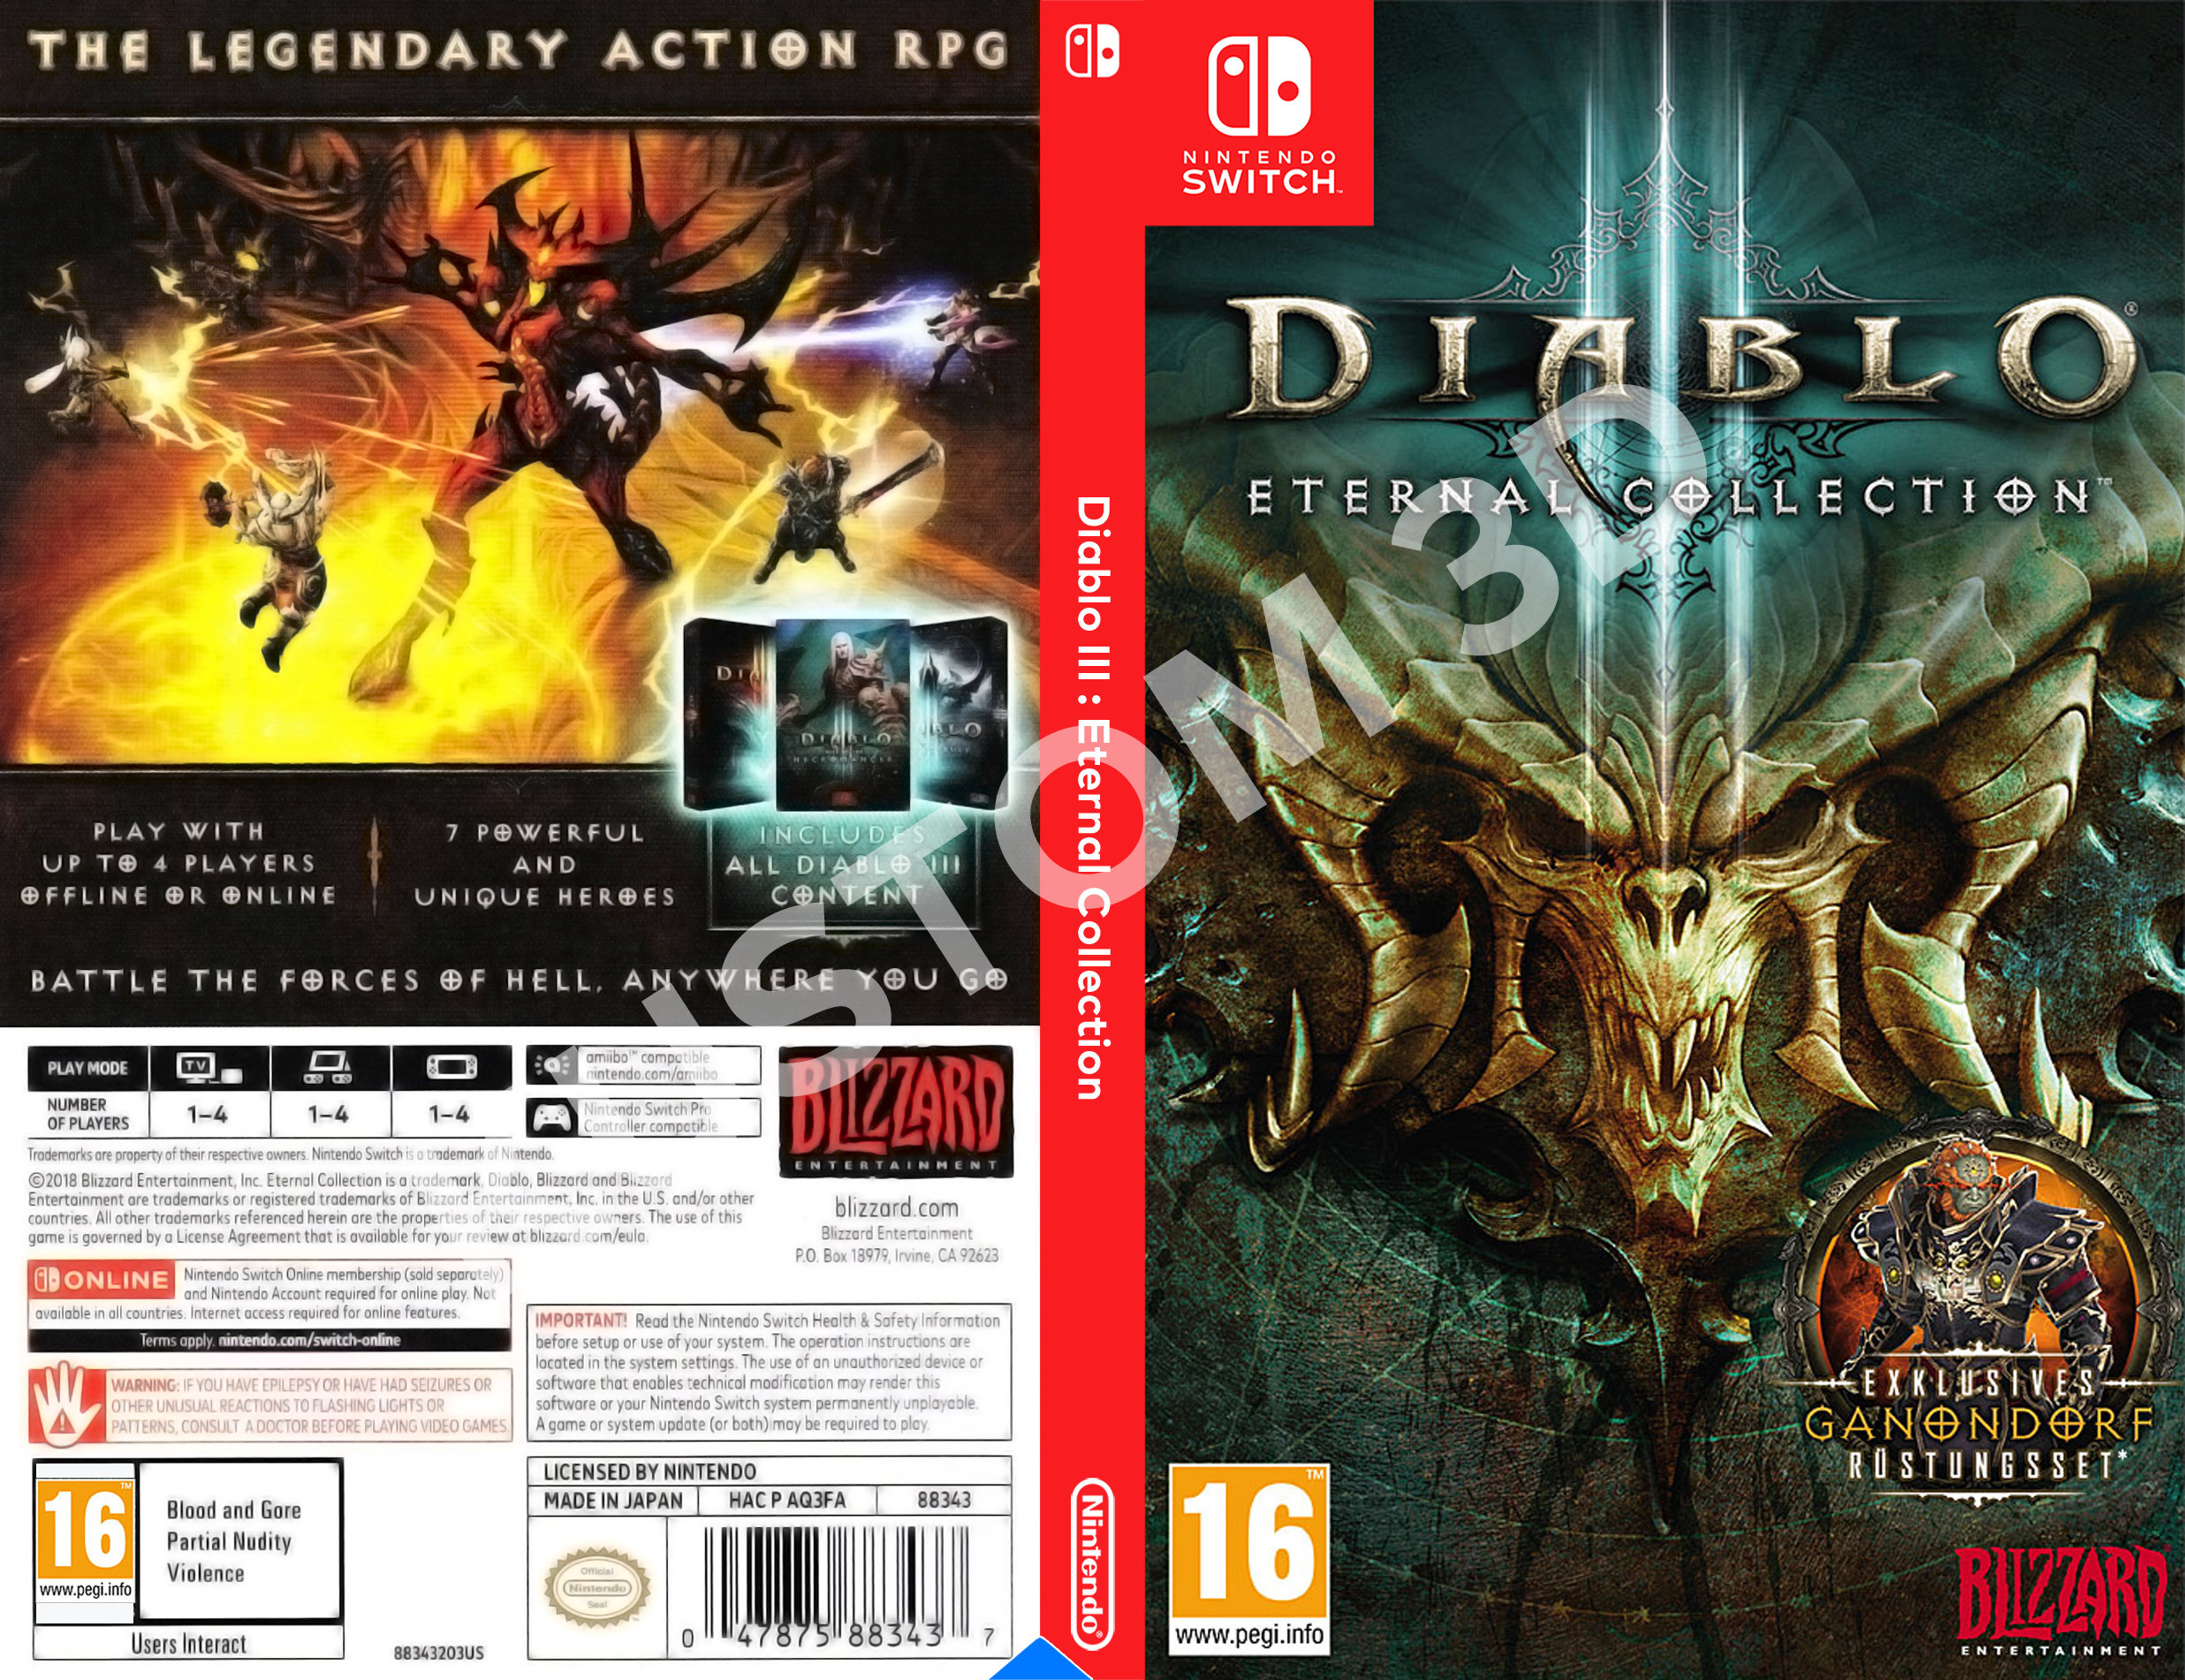 Diablo 2 nintendo switch. Diablo 3 Eternal collection Nintendo Switch. Diablo III: Eternal collection Нинтендо обложка. Diablo III: Eternal collection обложка. Диабло 3 Нинтендо свитч.